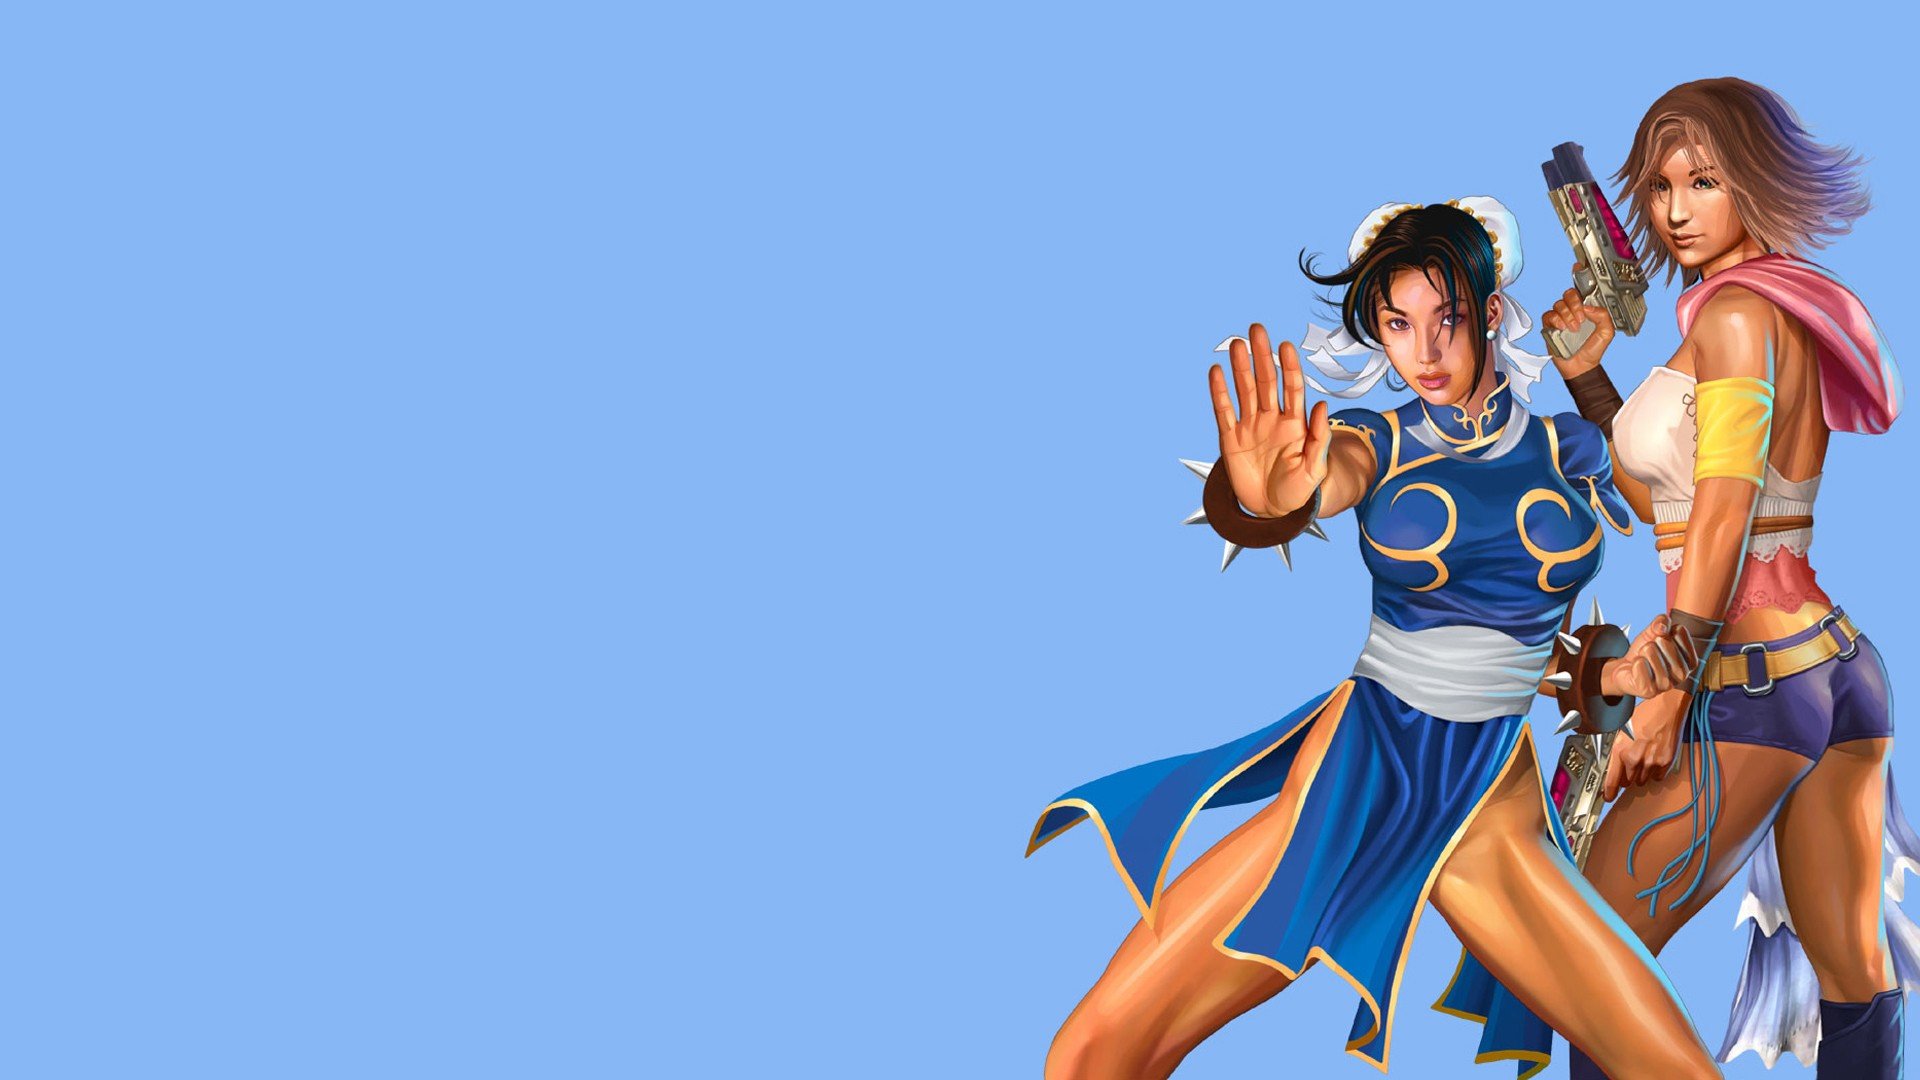 Chun Li, Yuna, Street Fighter, Final Fantasy, Illustration, Blue background Wallpaper